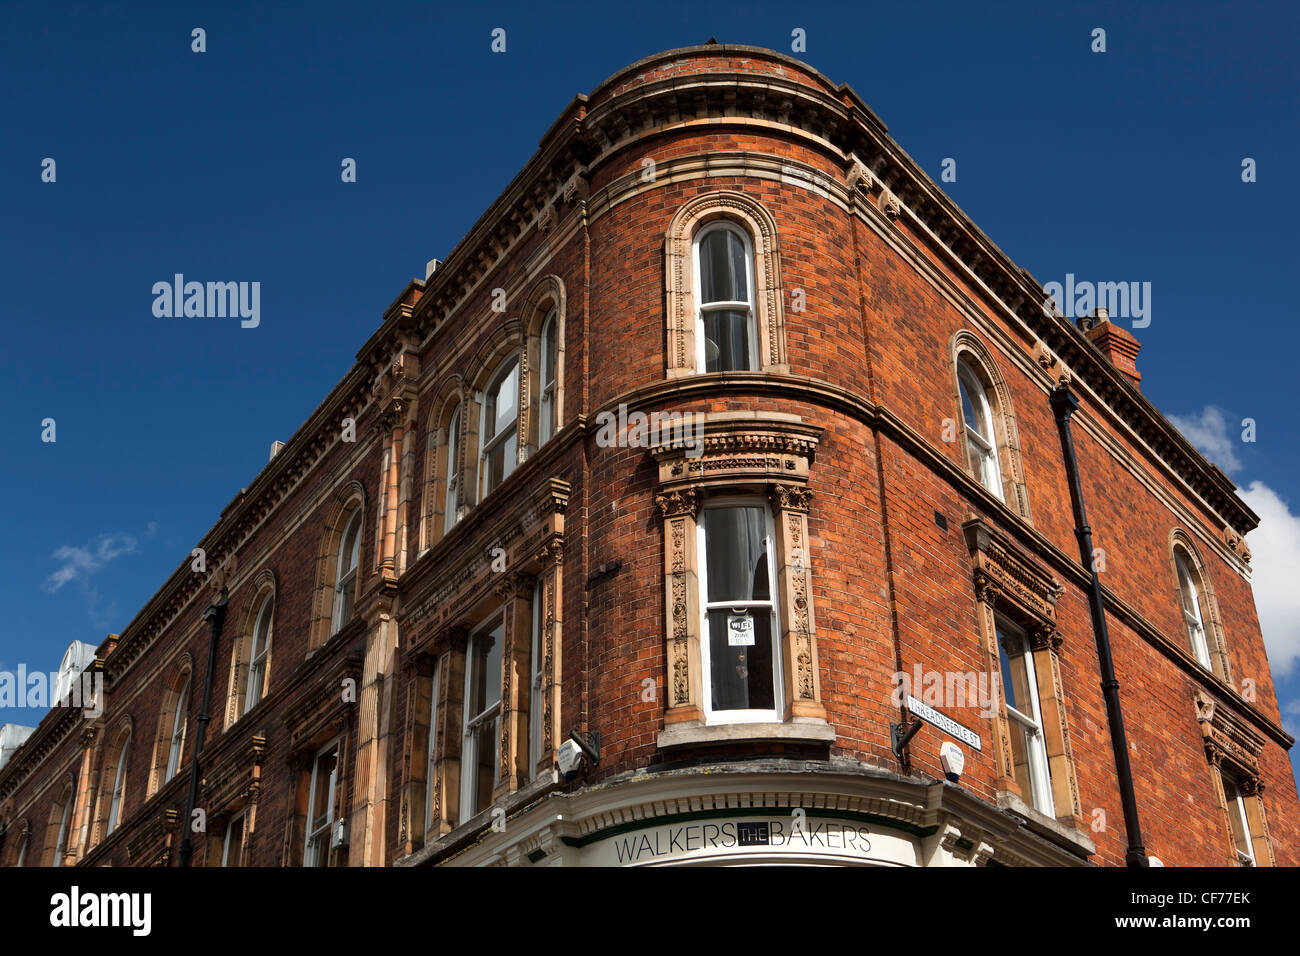 UK, Gloucestershire, Stroud, Kendrick Street, upper floors of Walkers Bakery shop in unusual street corner building Stock Photo